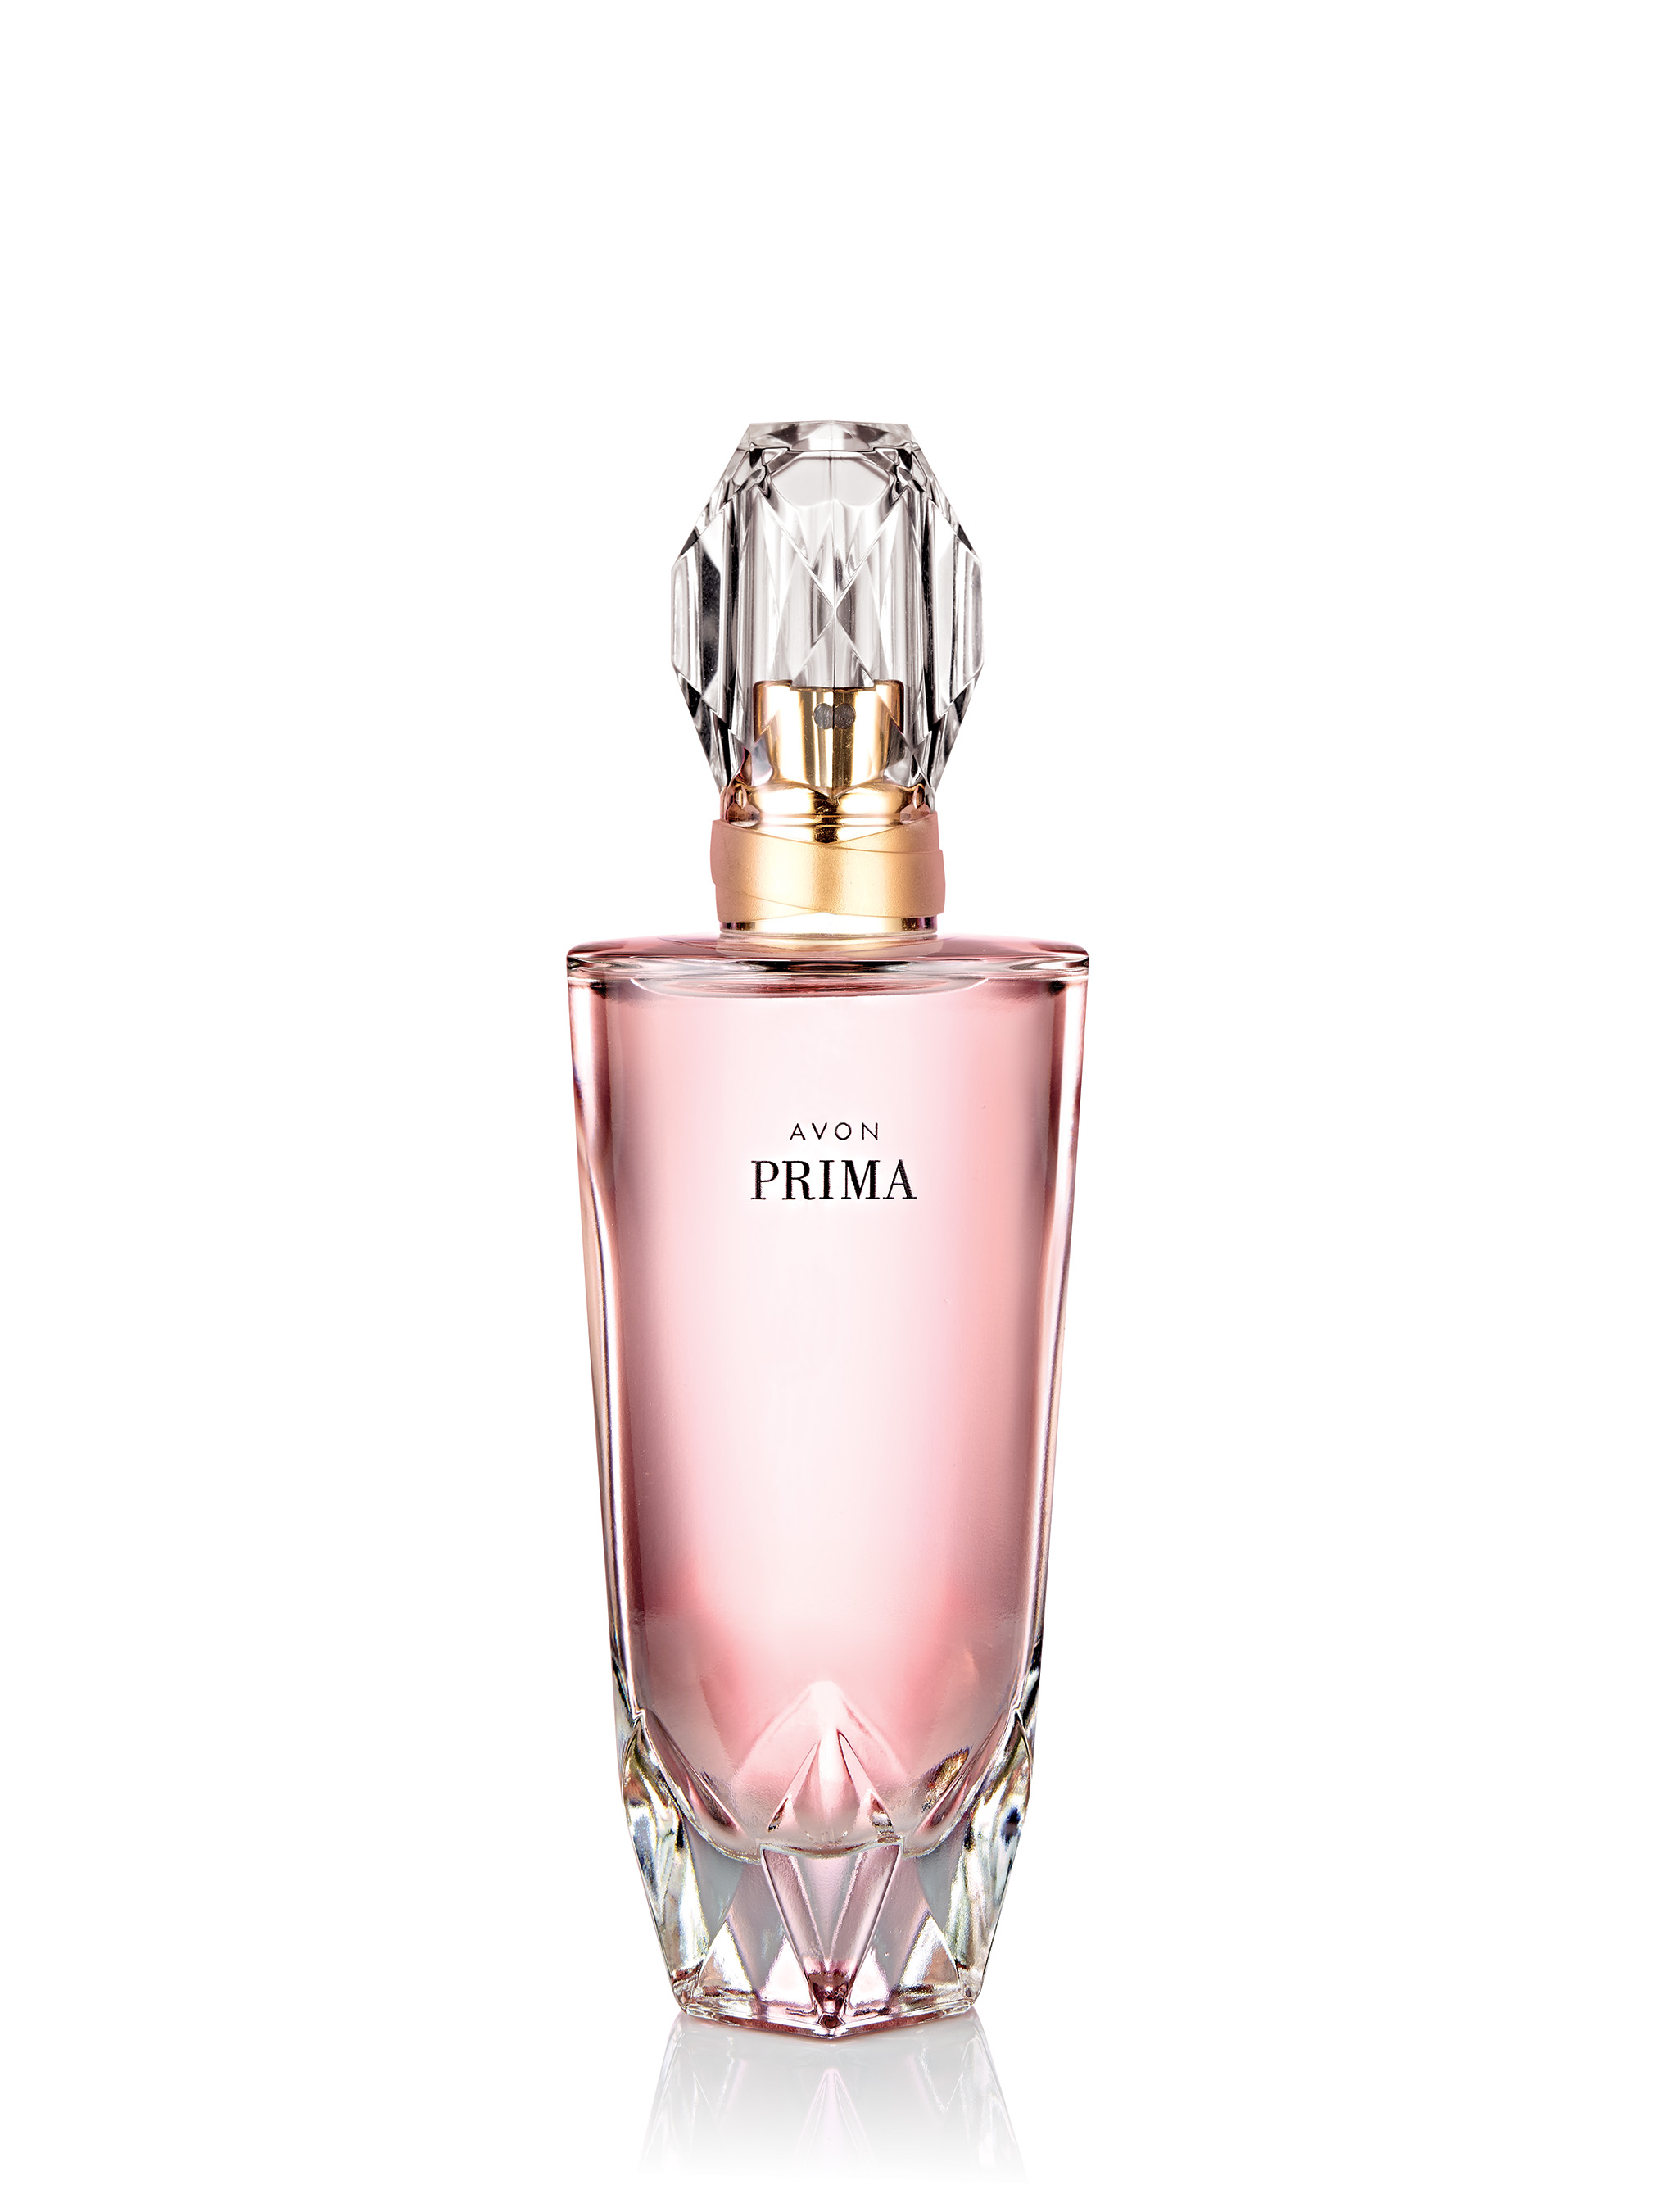 Avon To Release 'Prima' Ballerina Inspired Fragrance This Fall | LATF USA